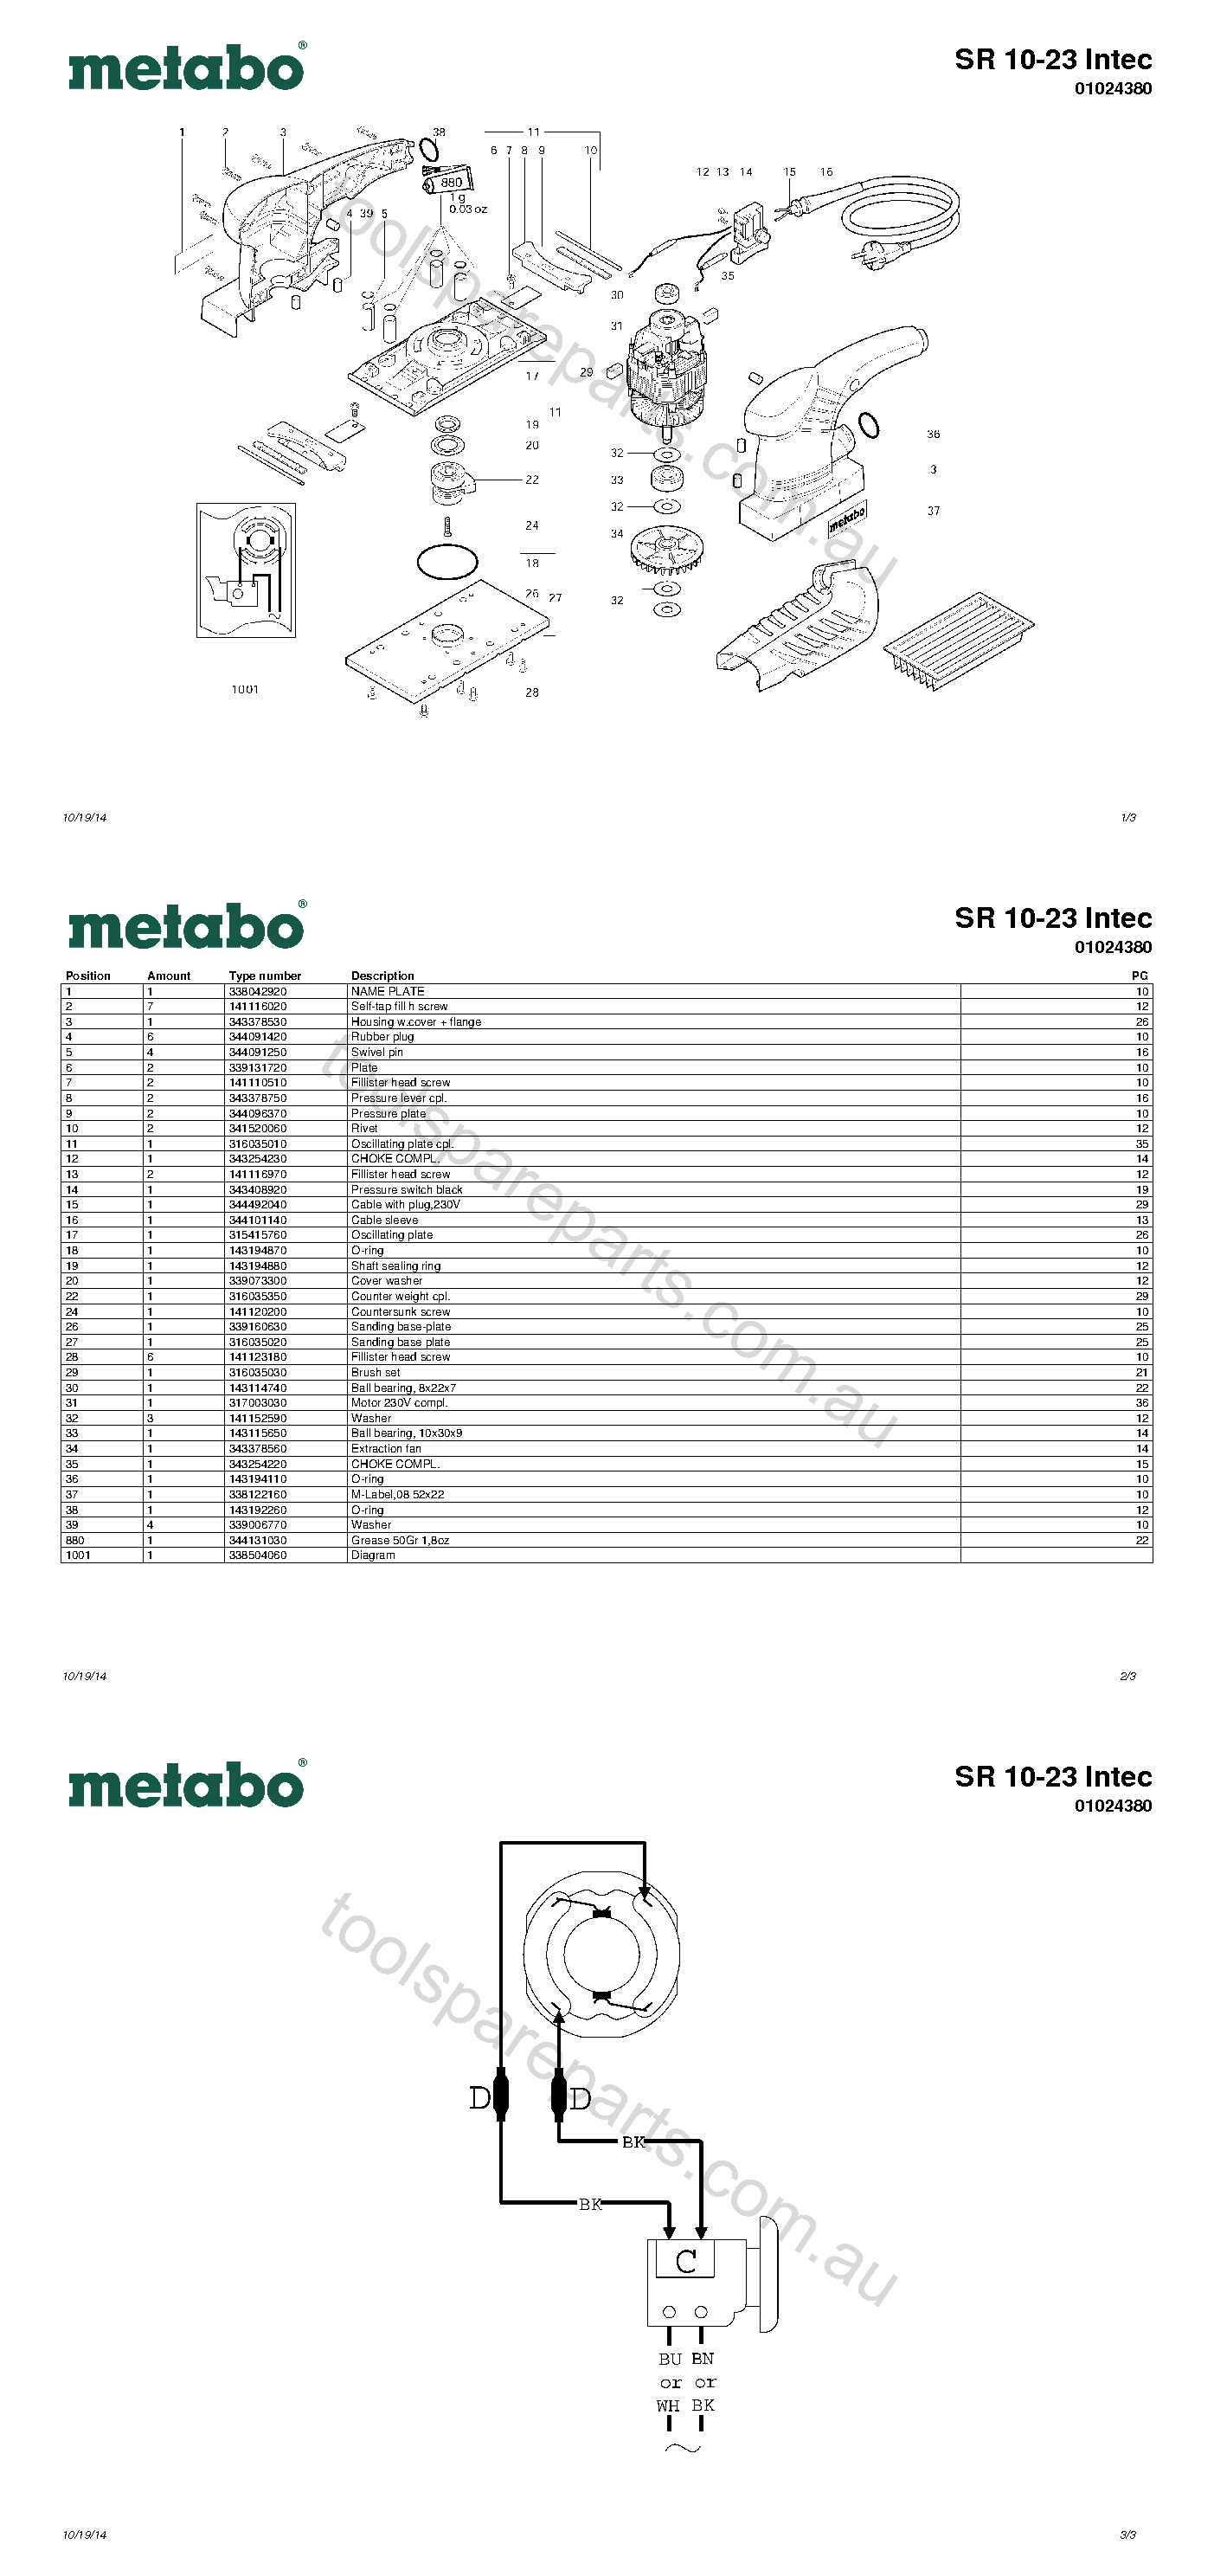 Metabo SR 10-23 Intec 01024380  Diagram 1